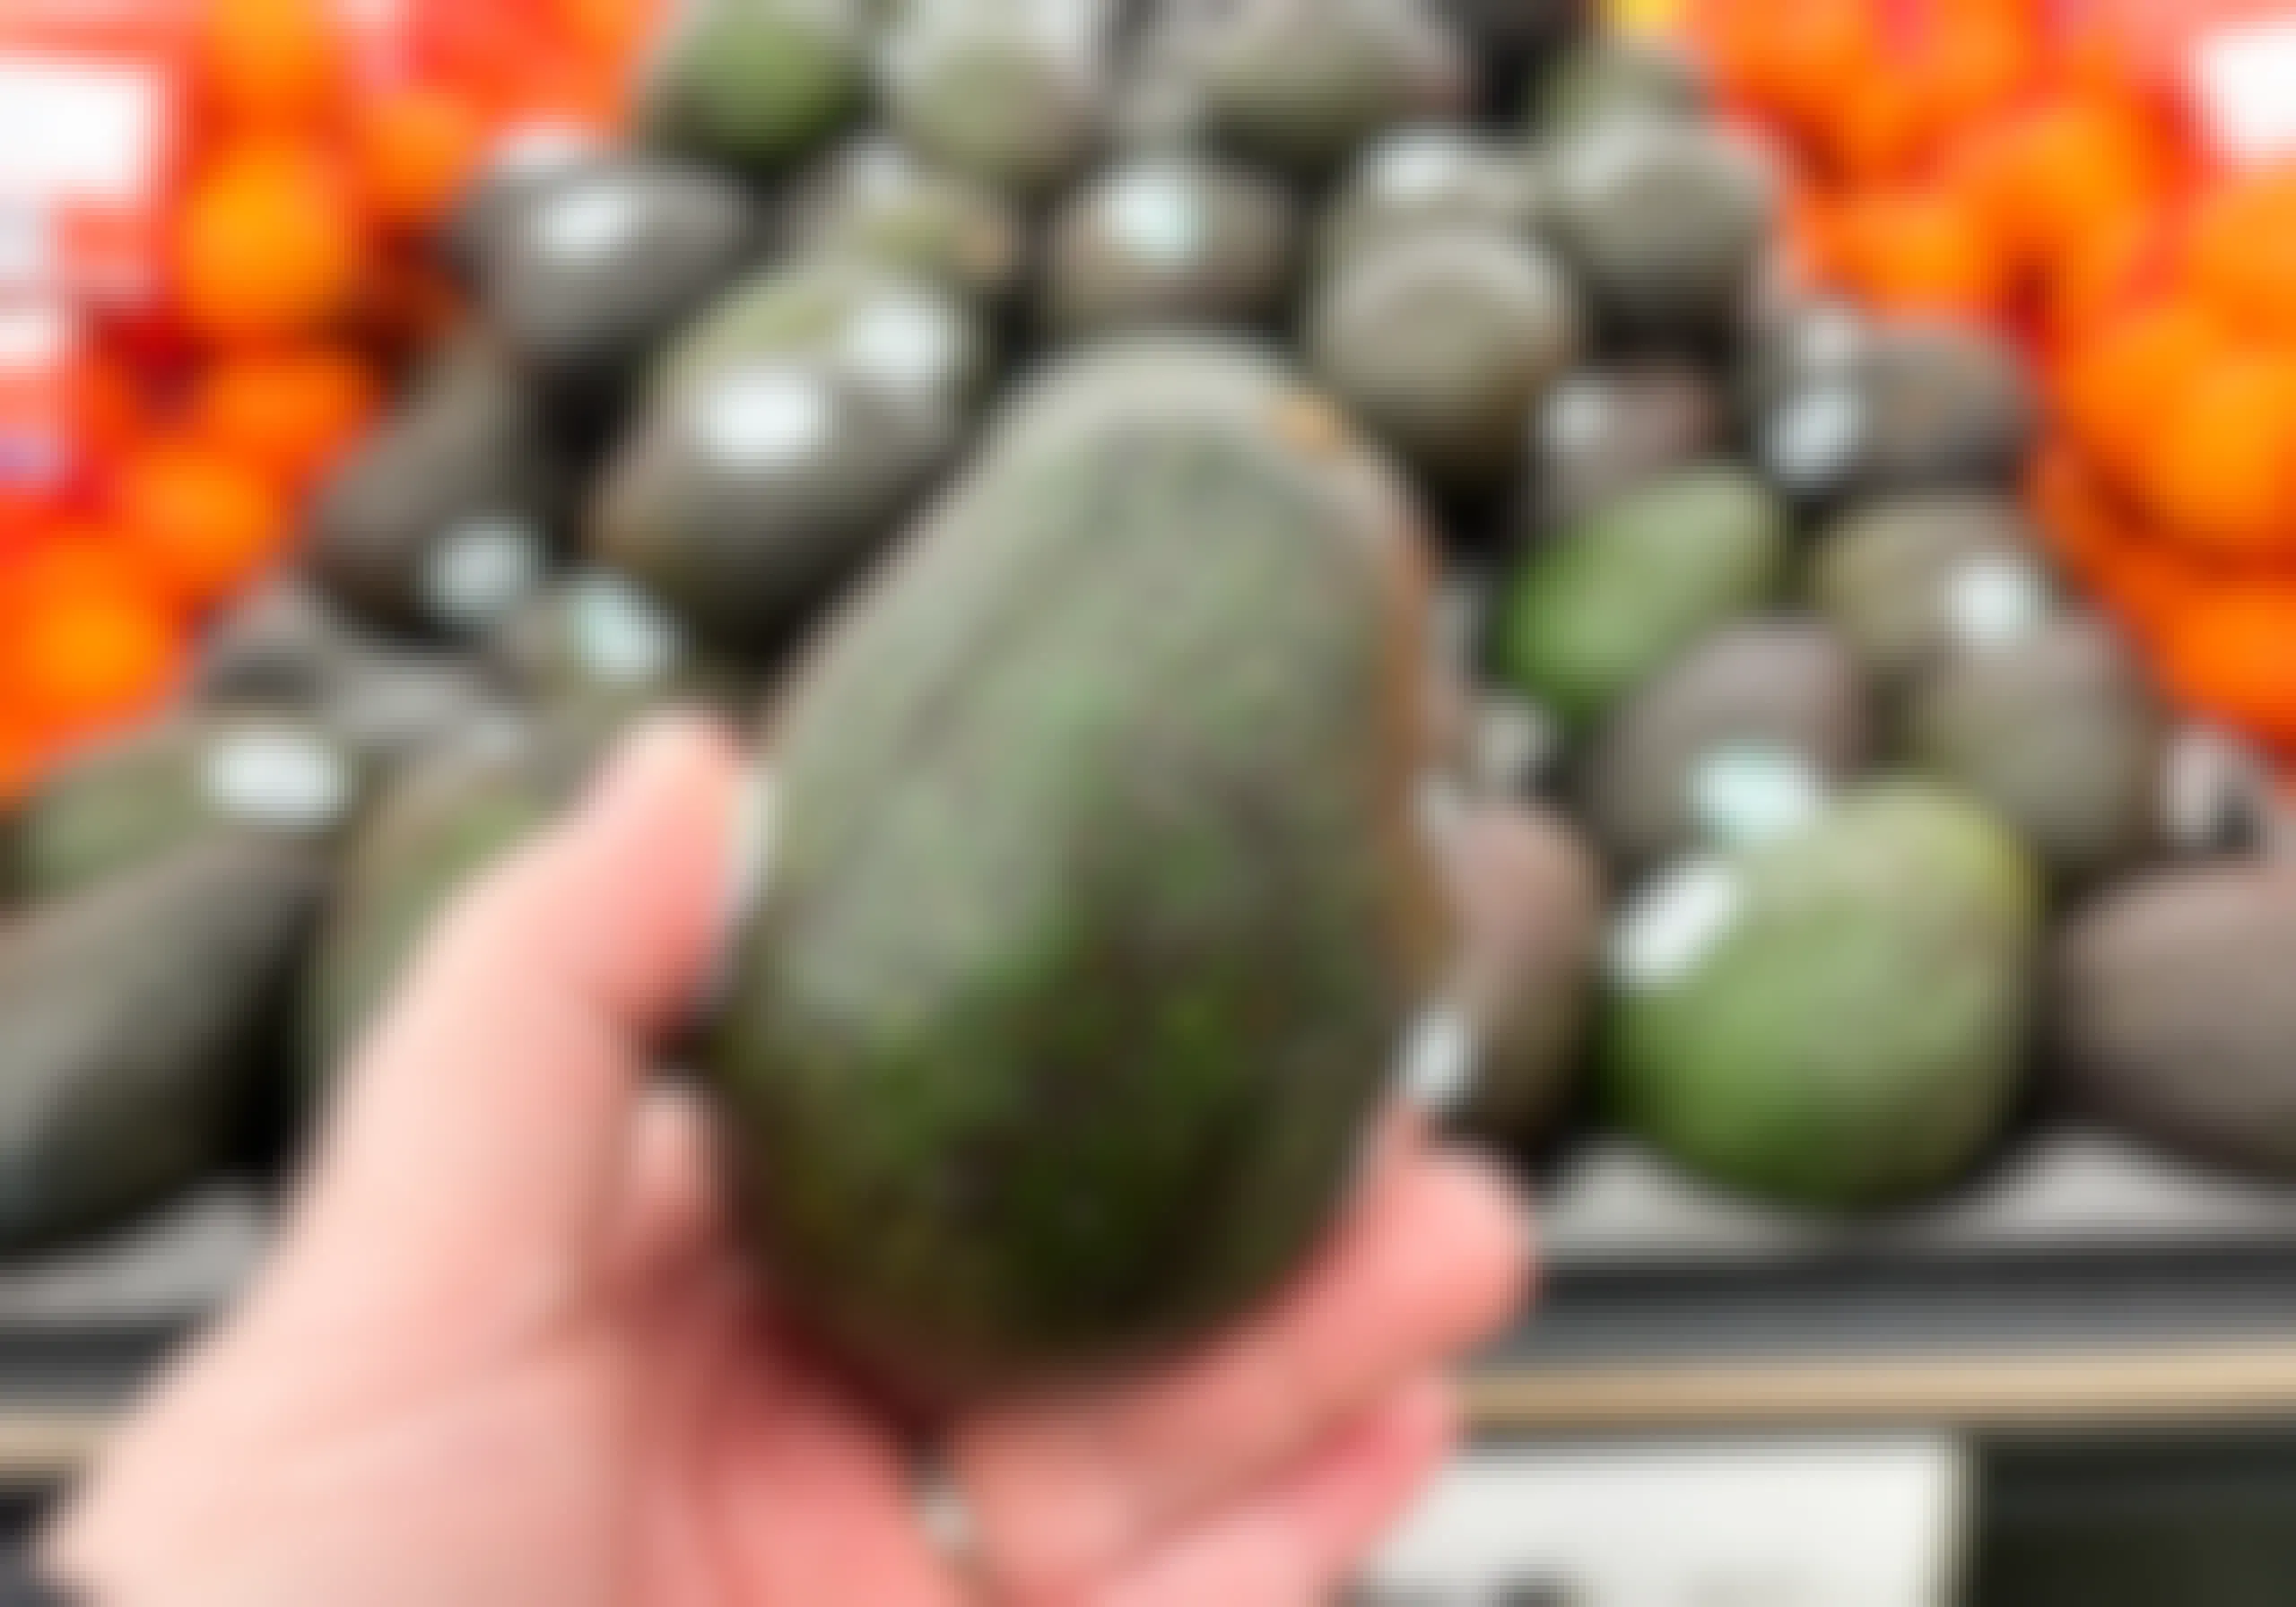 hand holding ripened avocado at store